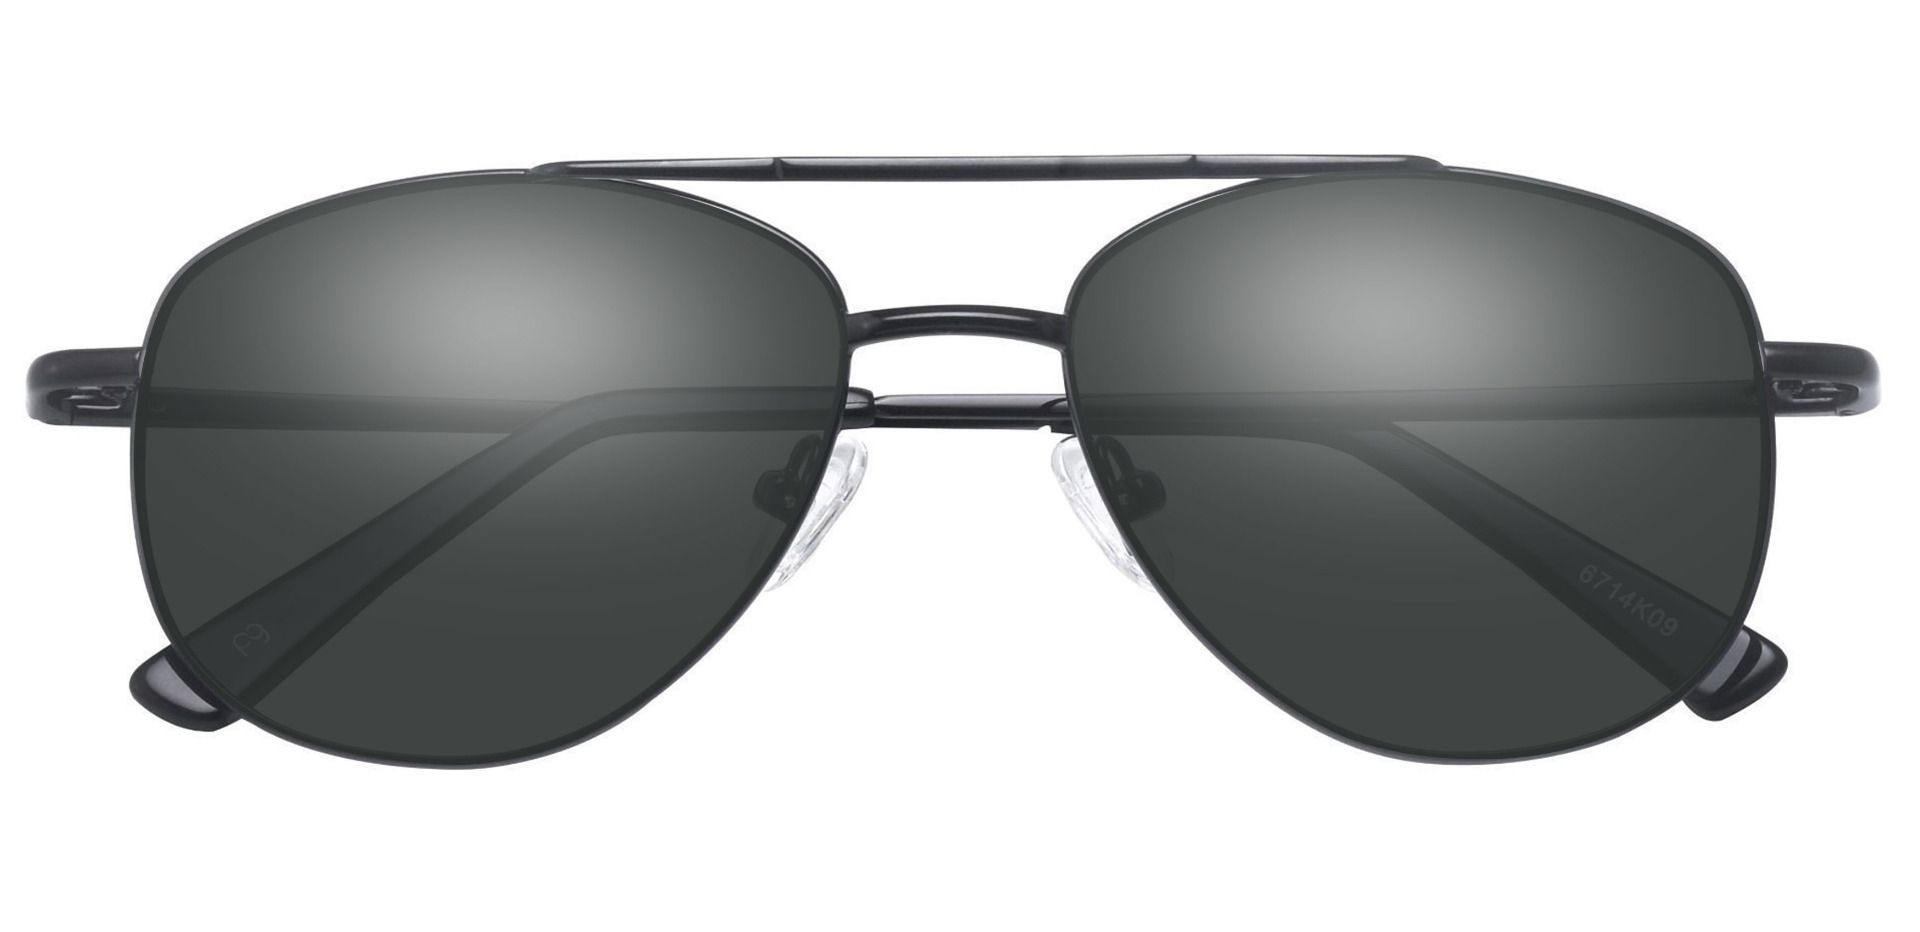 Dwight Aviator Prescription Sunglasses - Black Frame With Gray Lenses ...